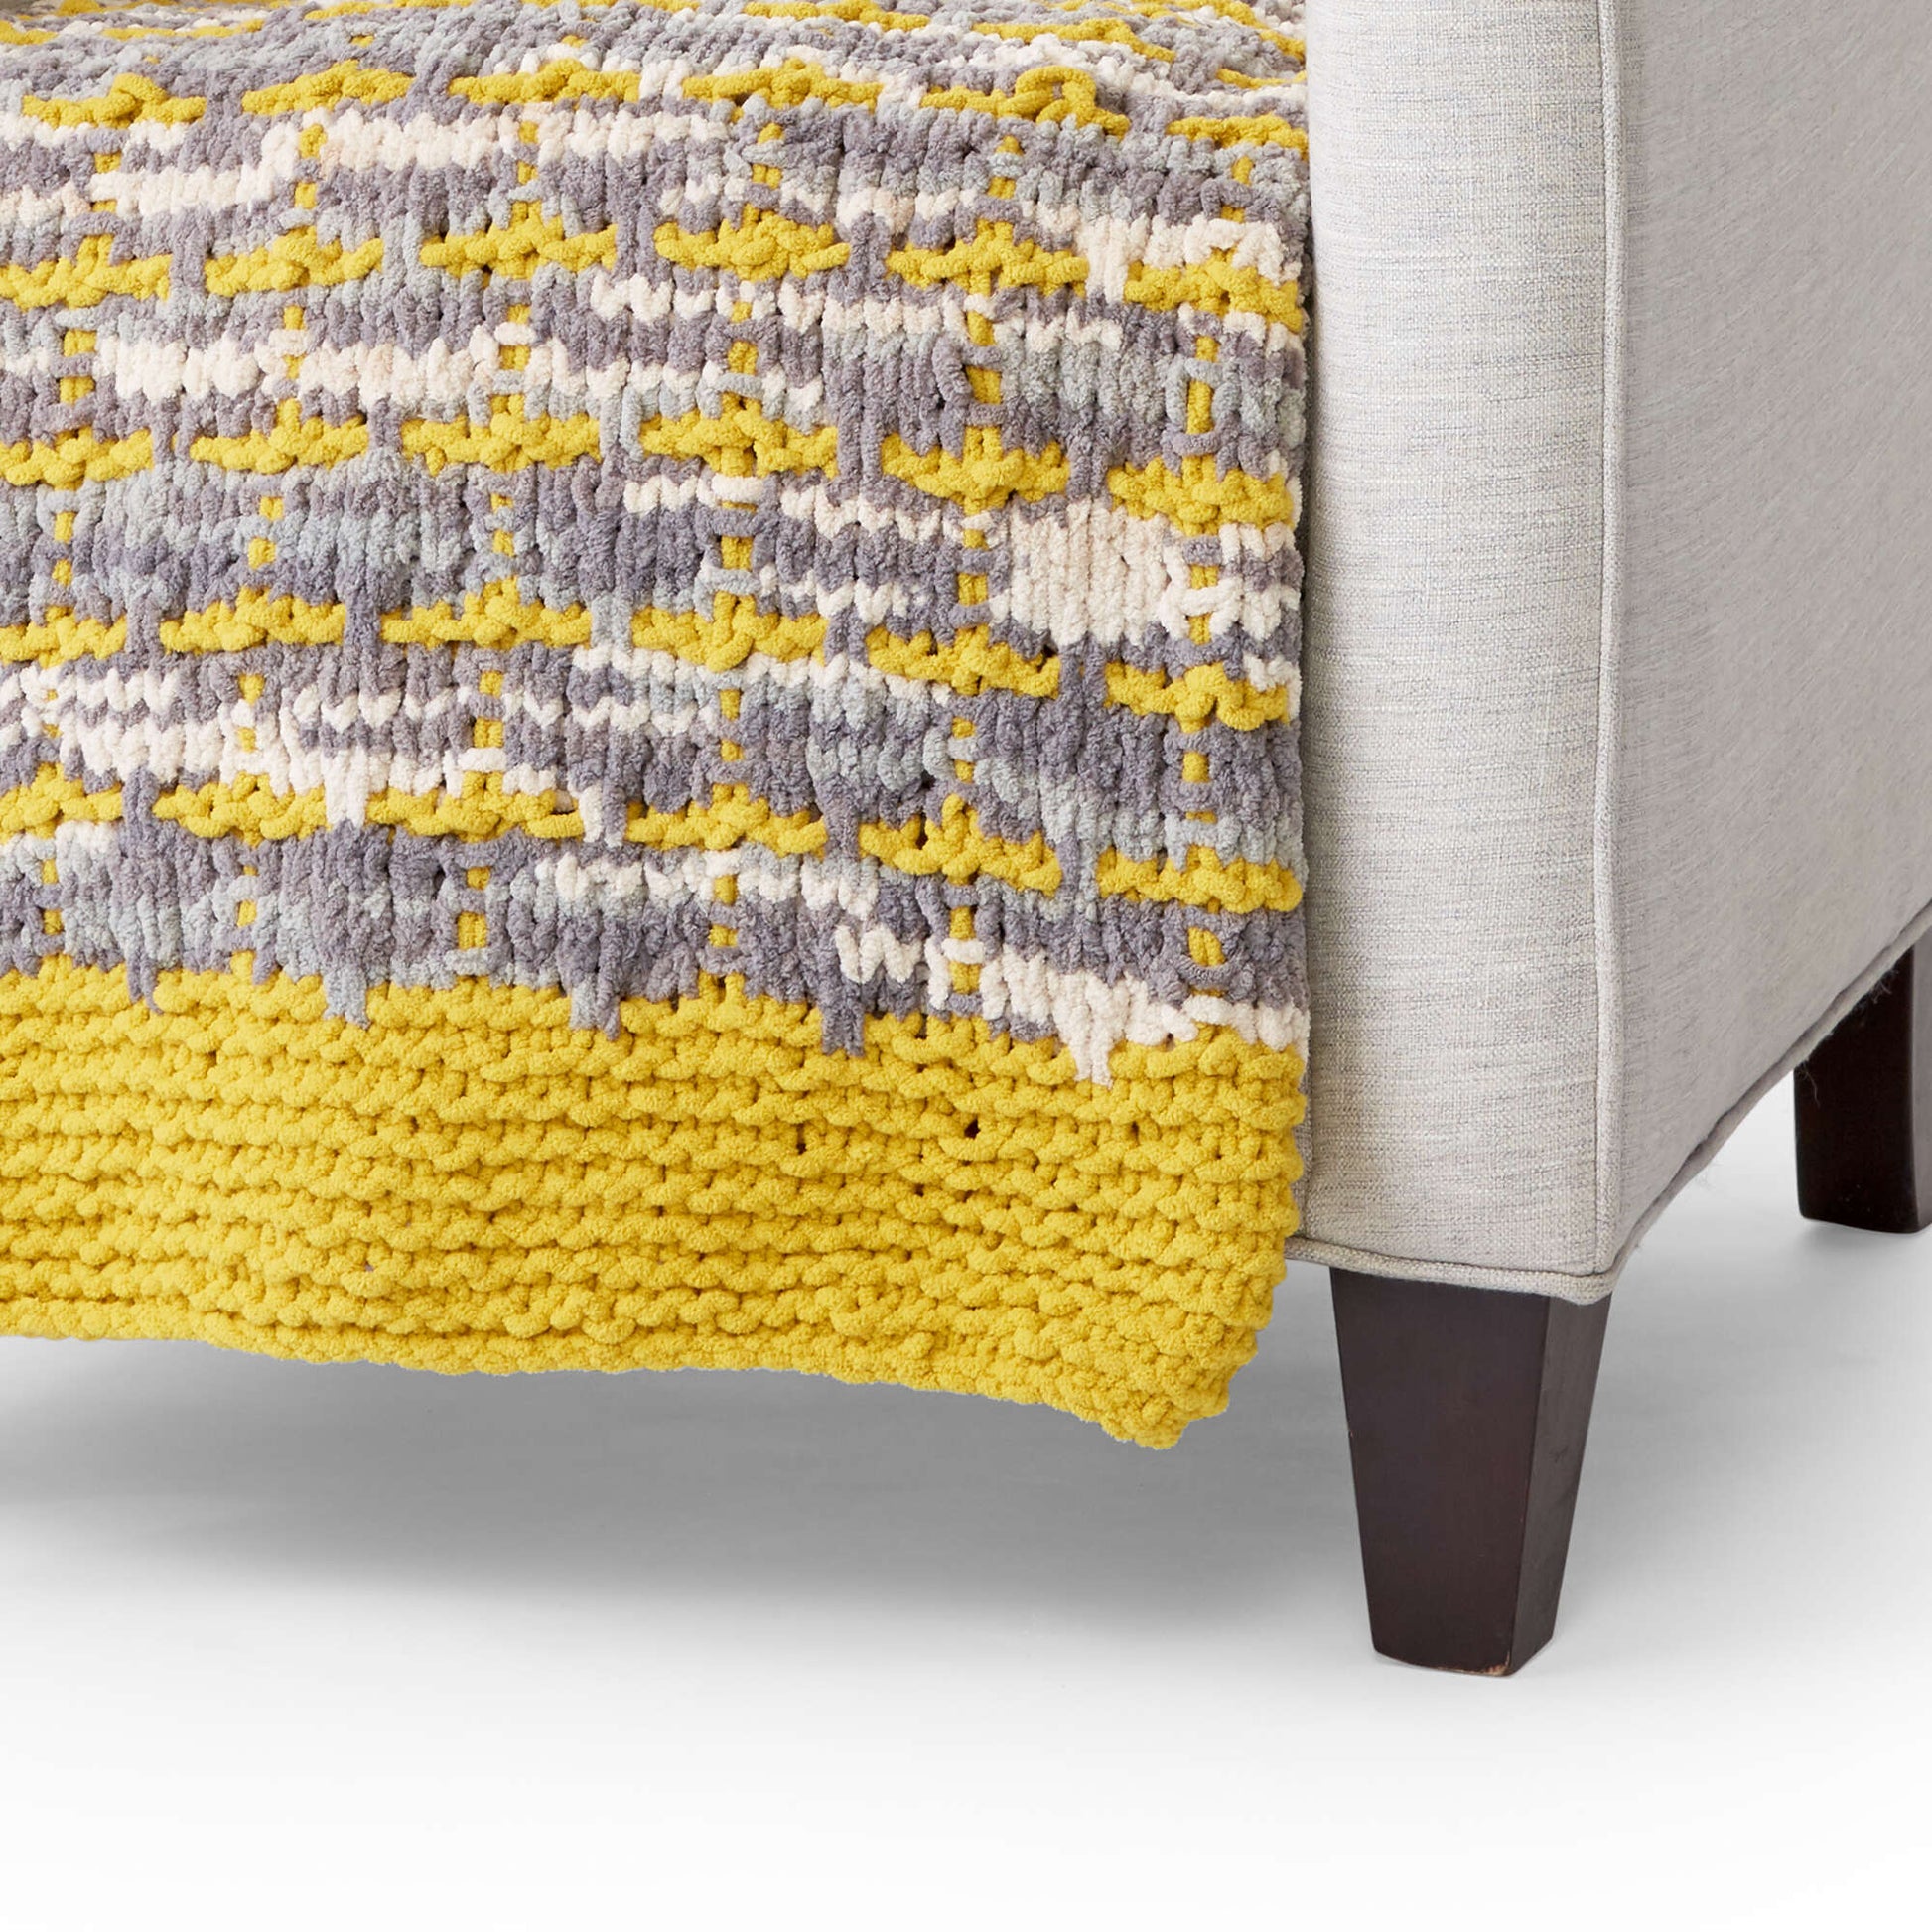 Free Bernat Gridline Knit Blanket Pattern